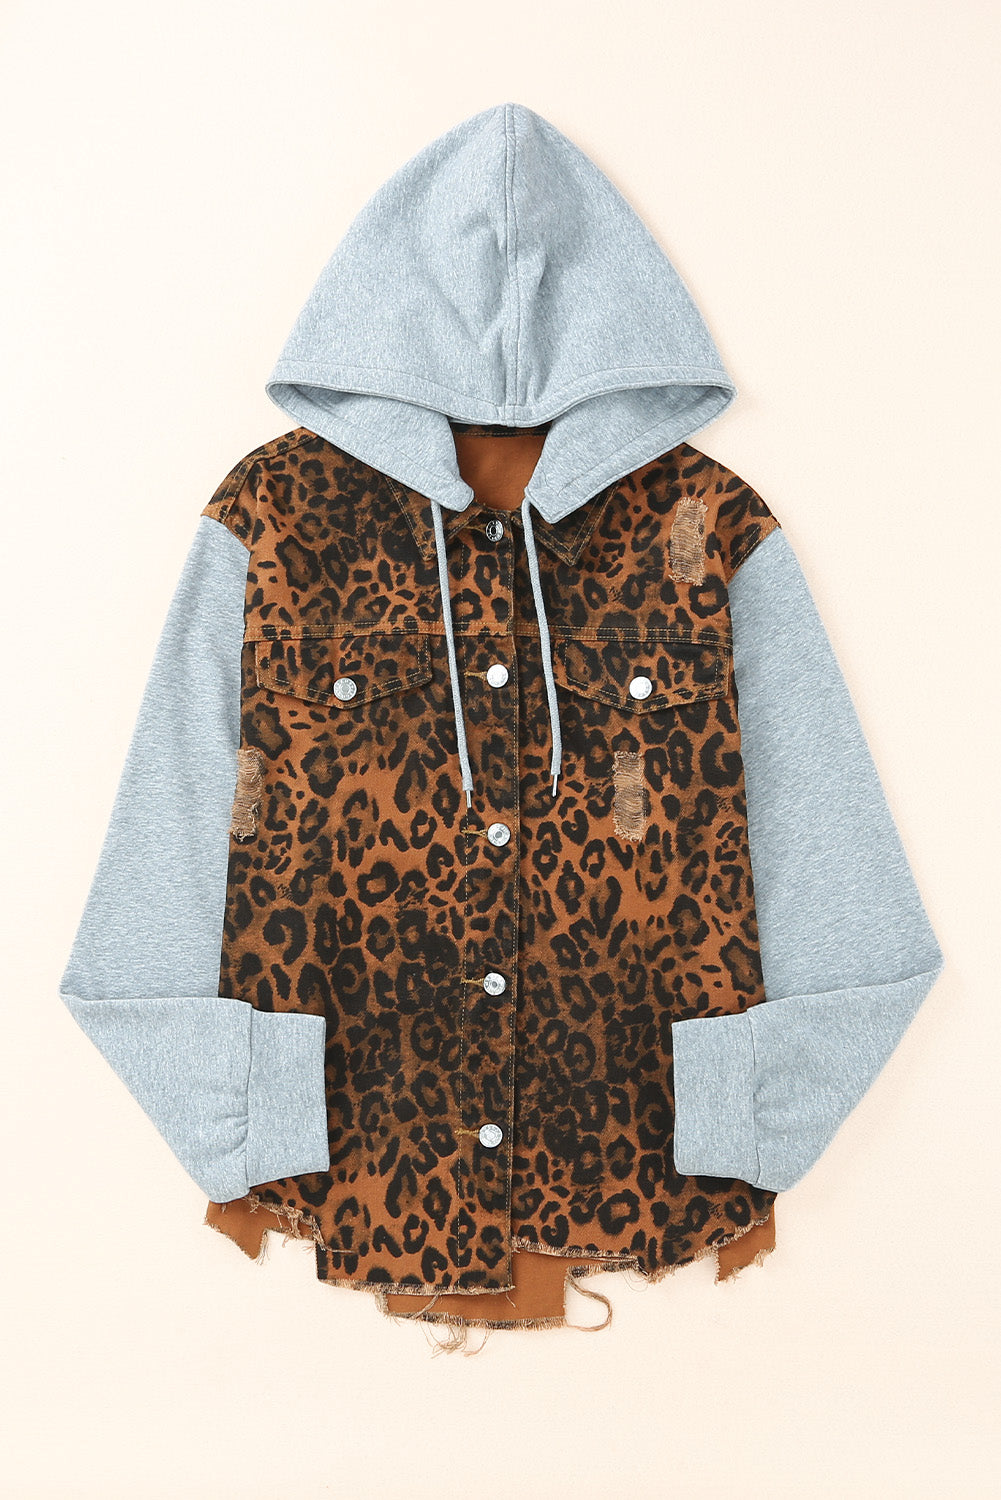 Leopard Patchwork Jacket